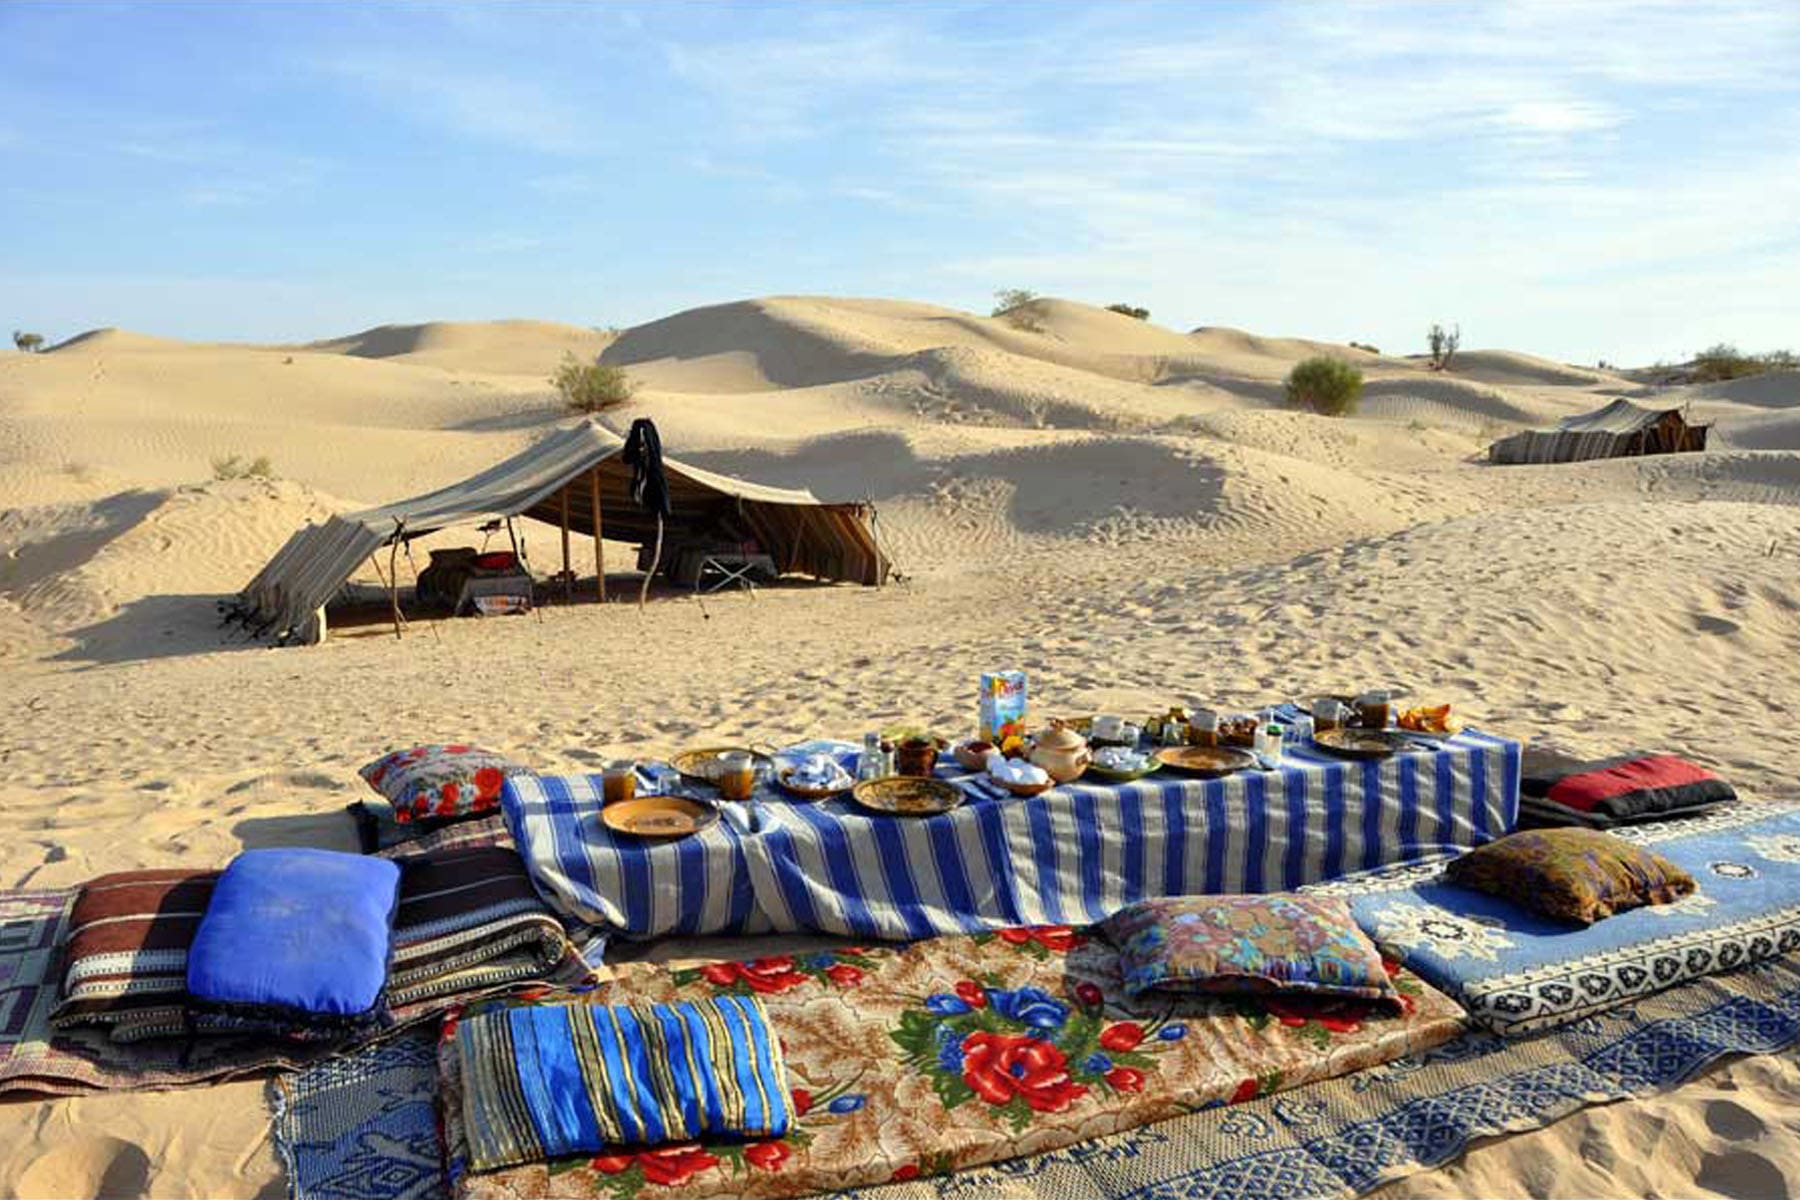 Overnight in the Tunisian Sahara desert under a tent